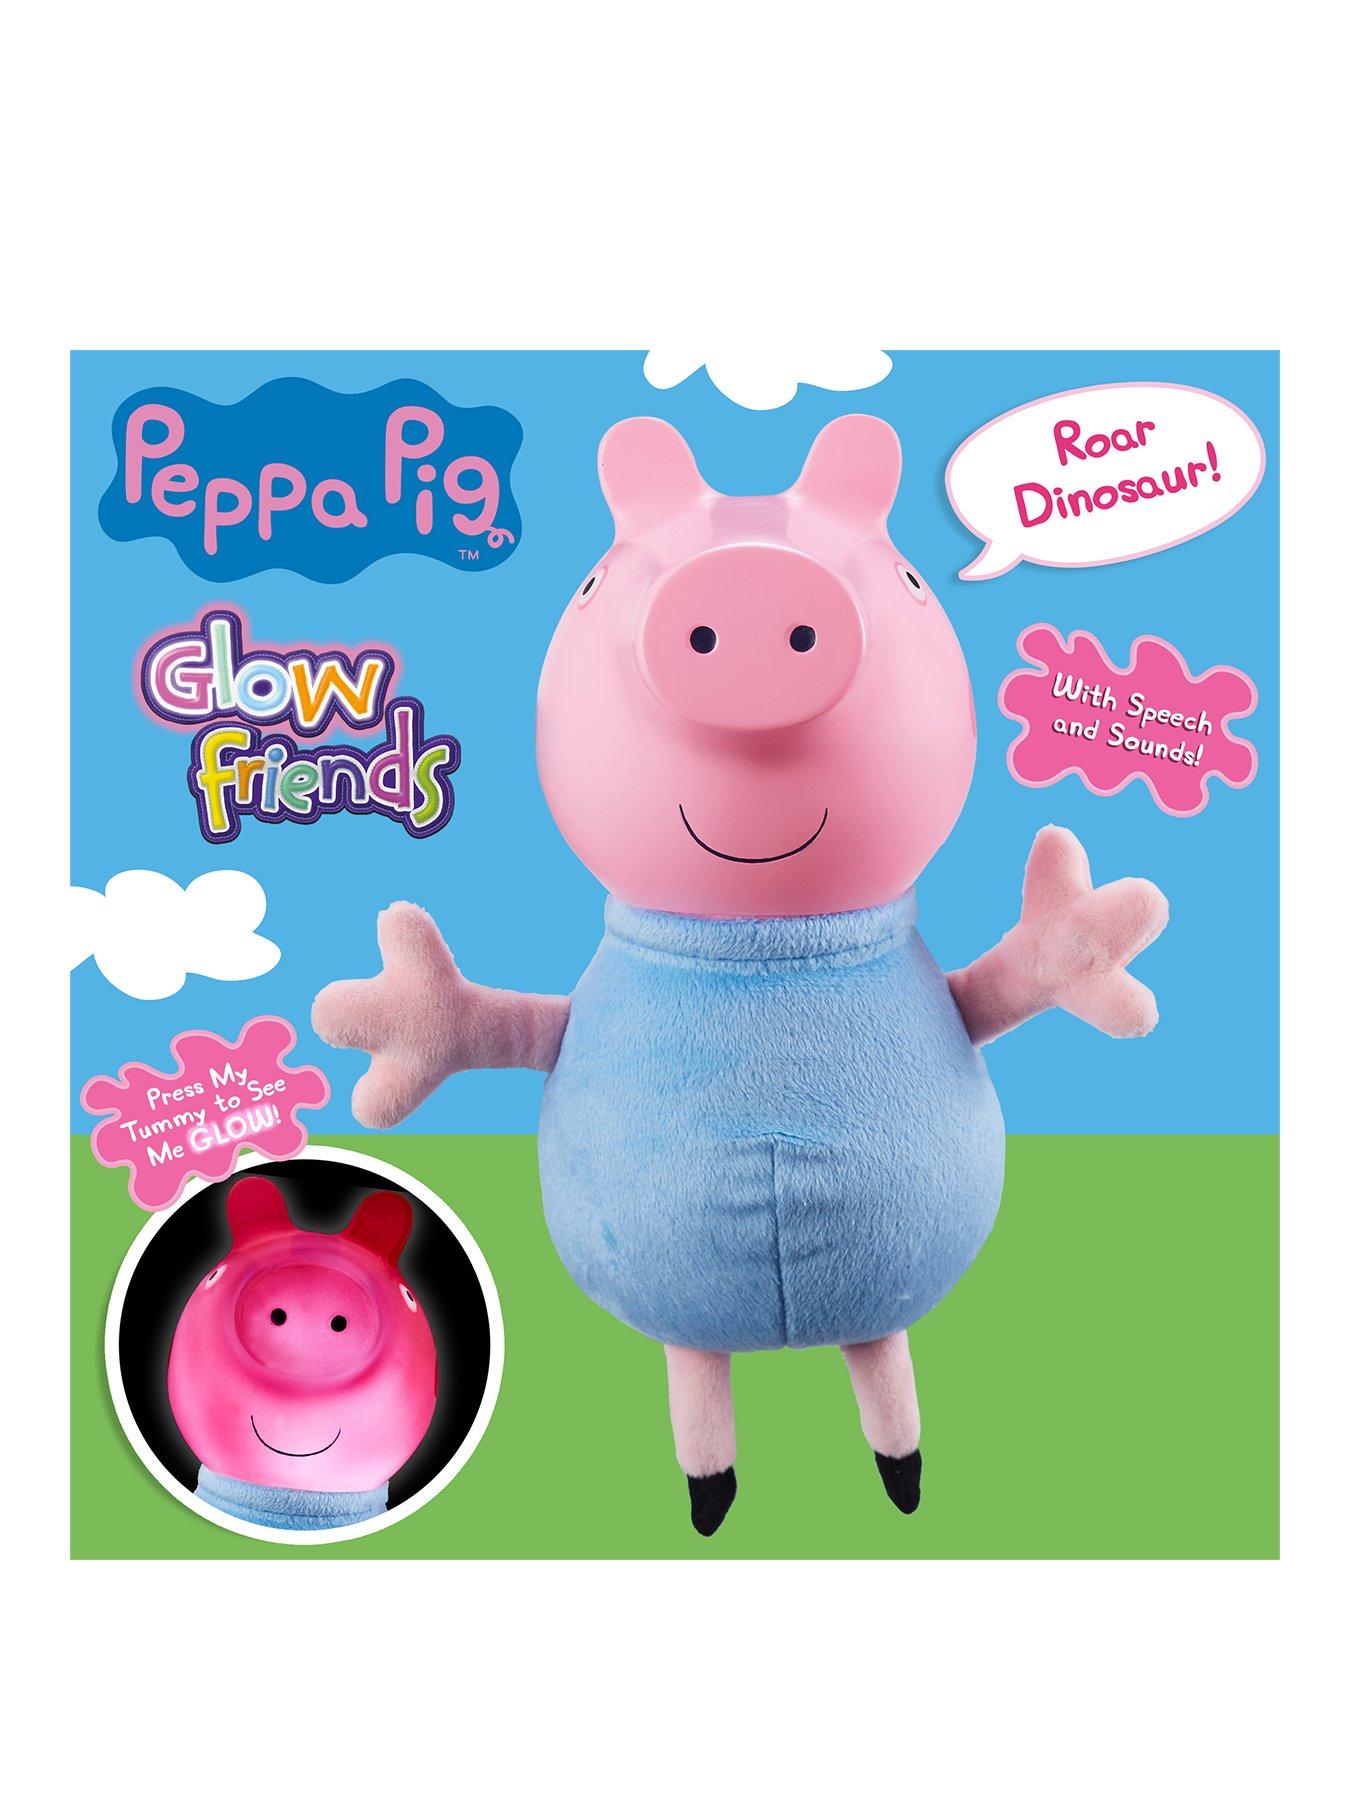 peppa pig talking toy